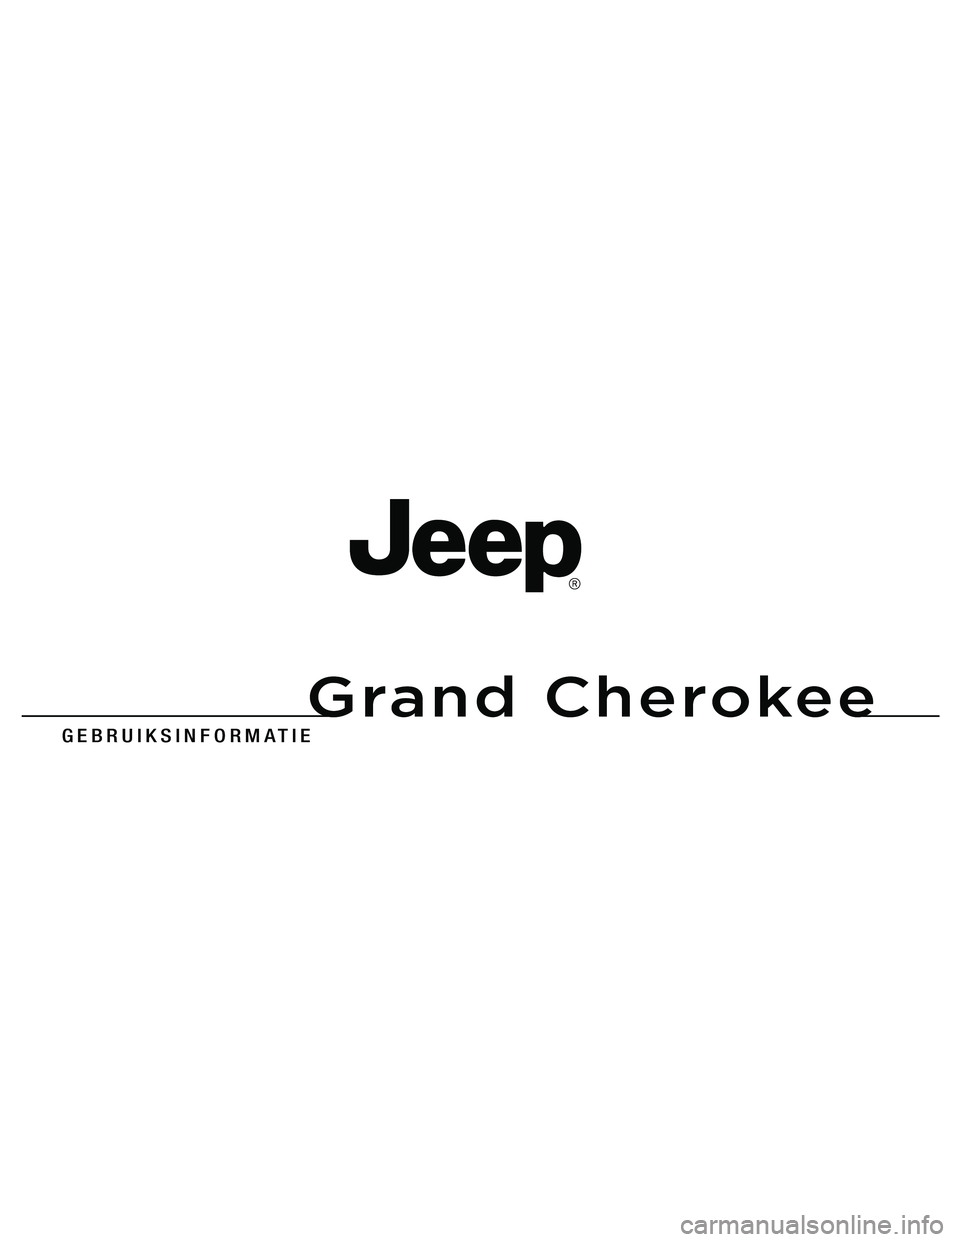 JEEP GRAND CHEROKEE 2016  Instructieboek (in Dutch) 
Grand Cherokee
G E B R U I K S I N \f O R M A \b I E
G r a n d   C h e r o k e e
11WK741-126-DUT-AA
                  \k        Gedruk\f in E\kur\bpa 11 